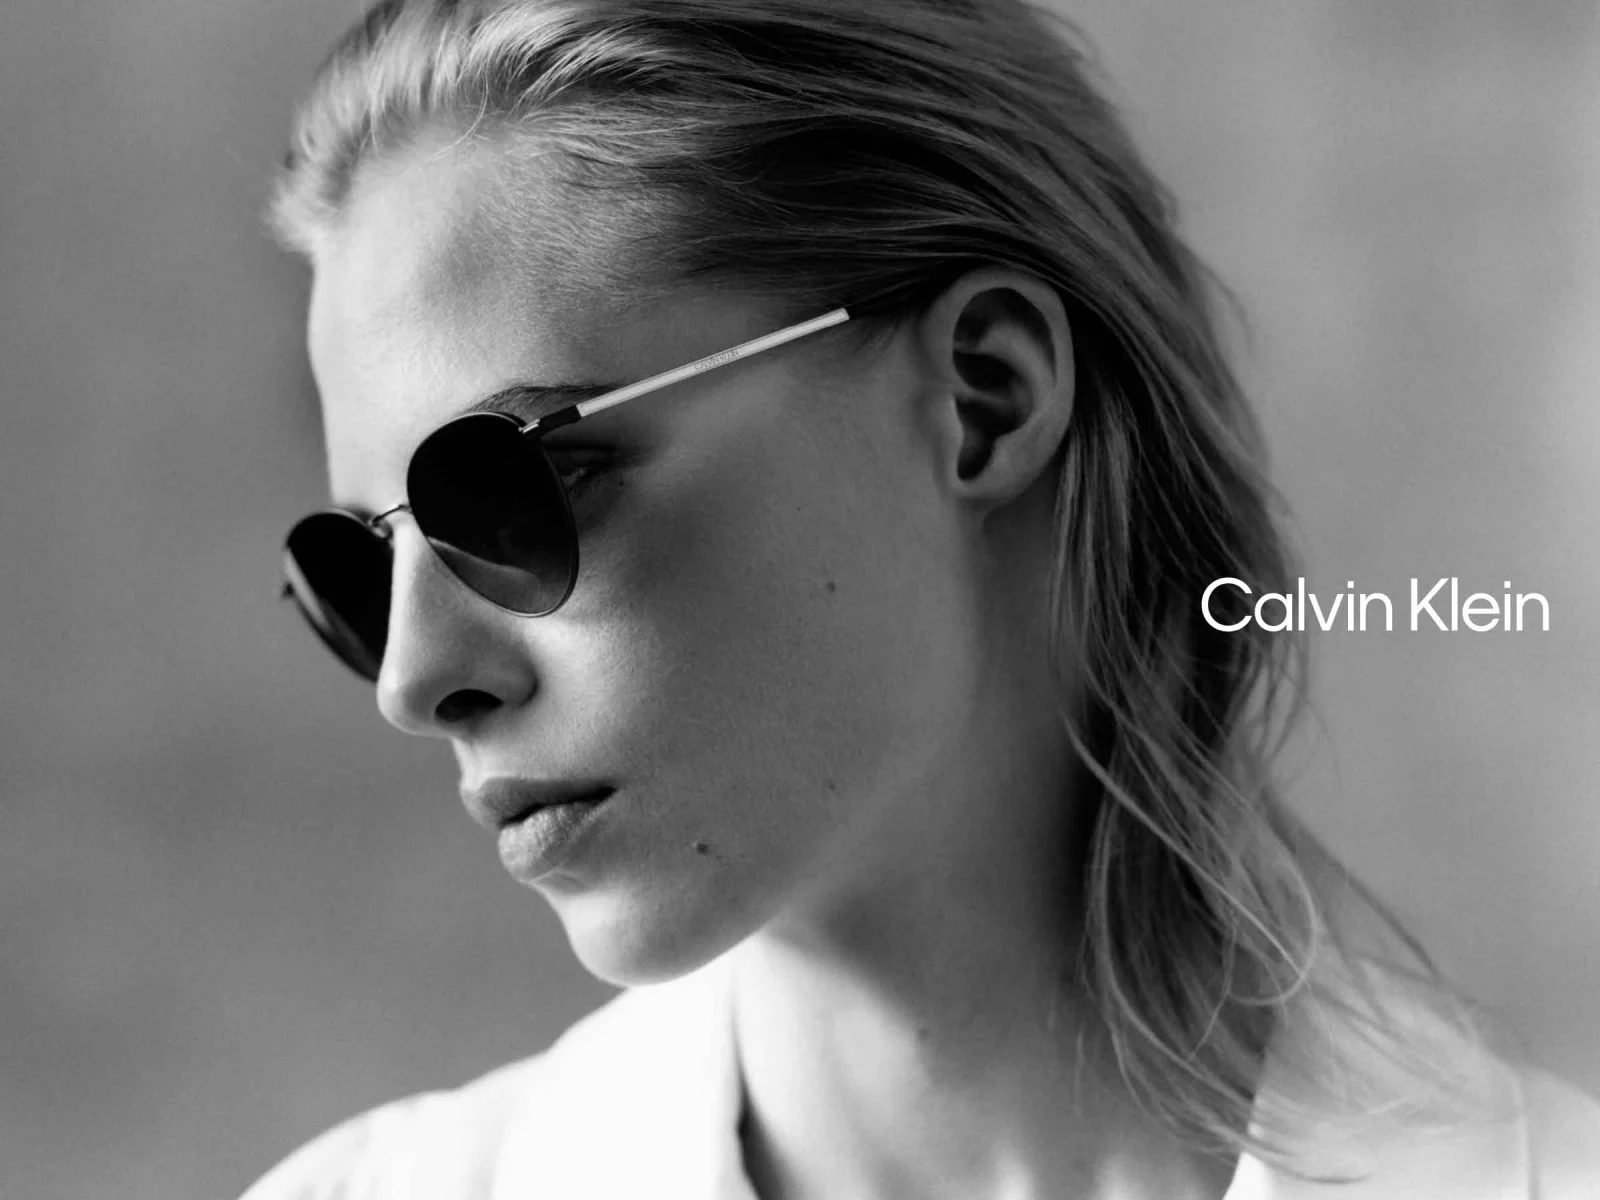 Calvin Klein 6 by Paul Maximilian SCHLOSSER